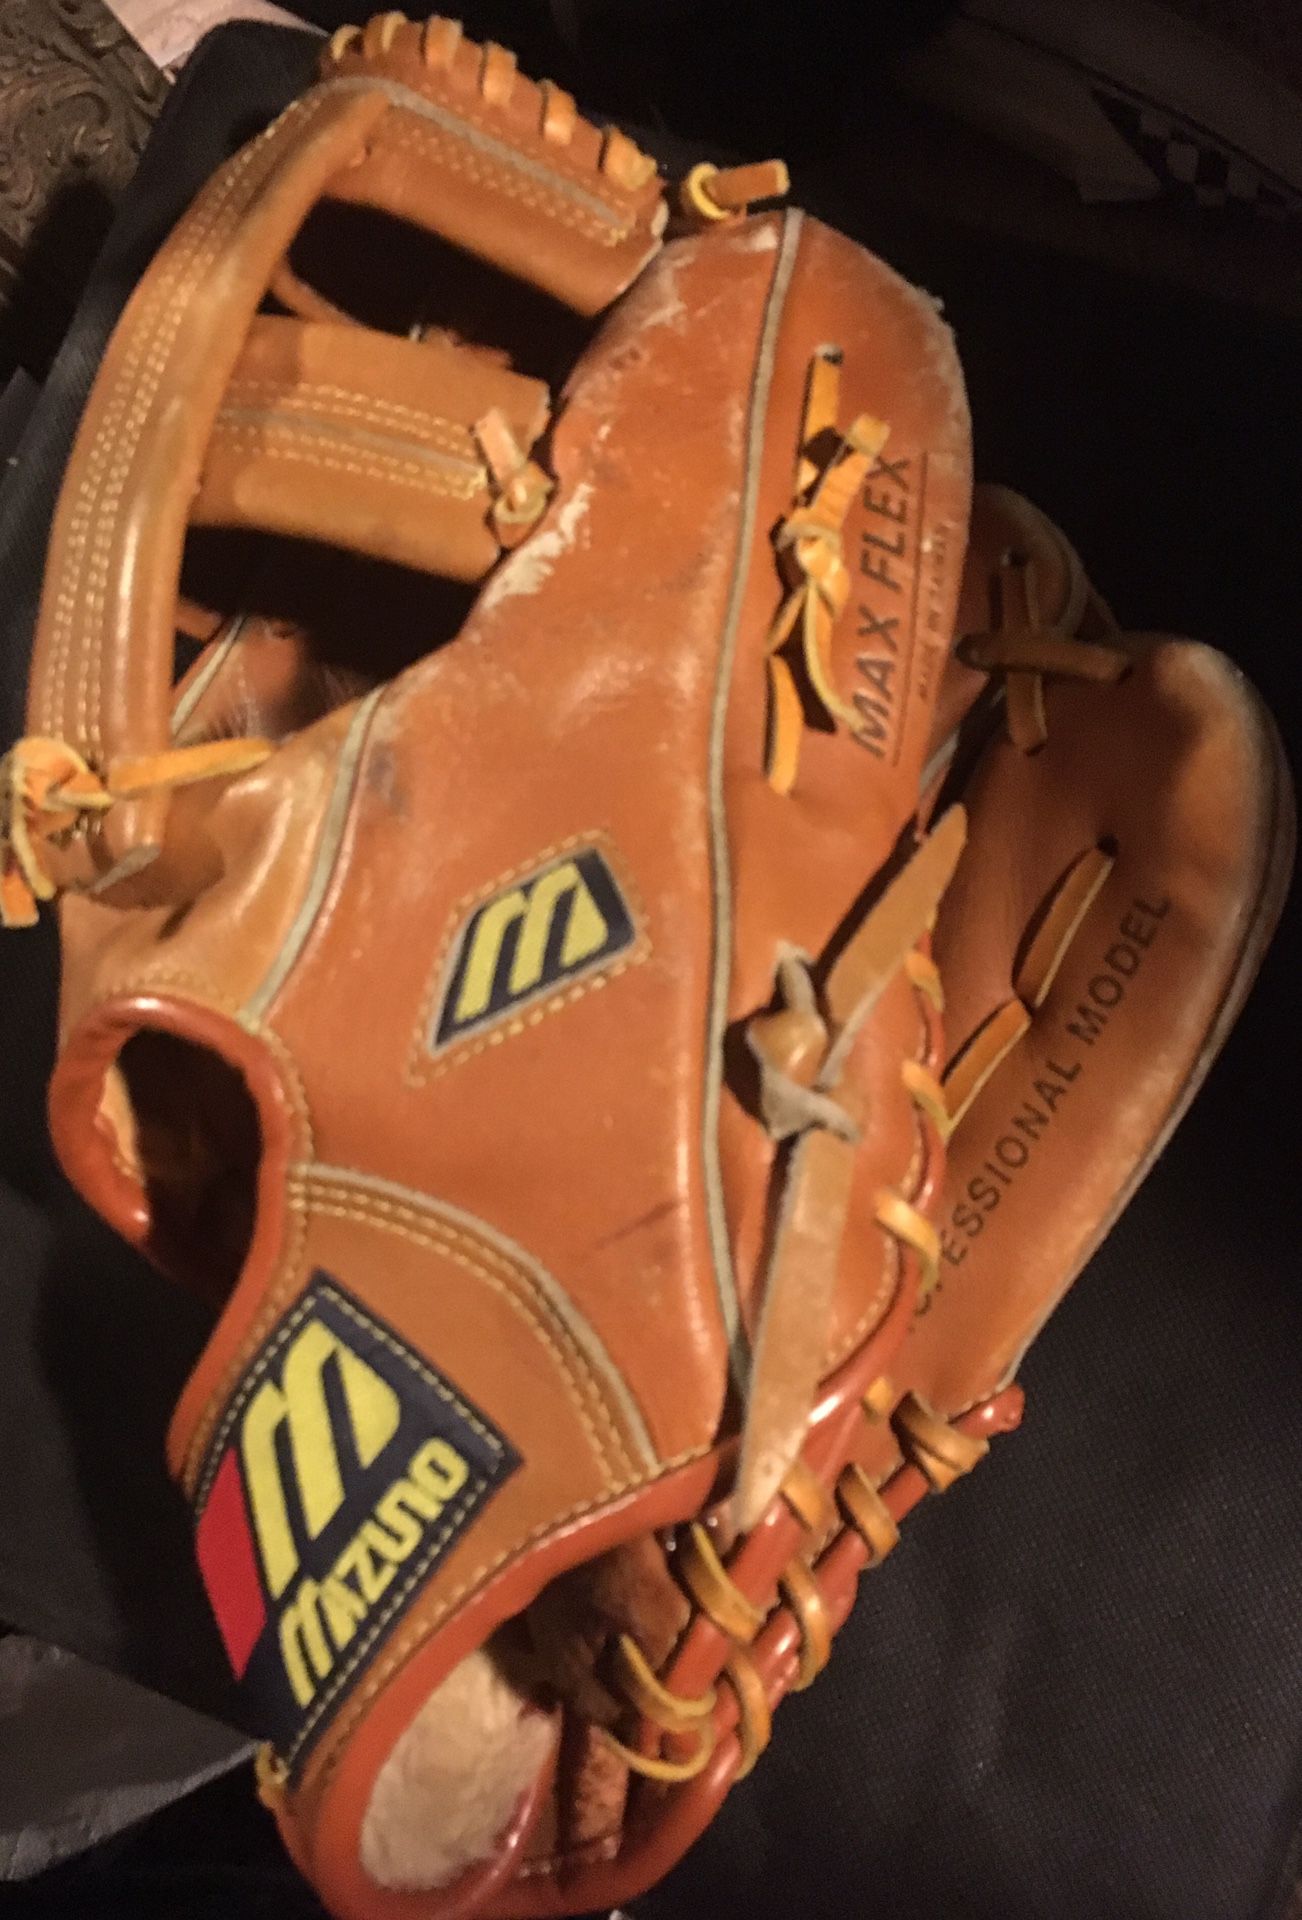 Baseball / softball glove